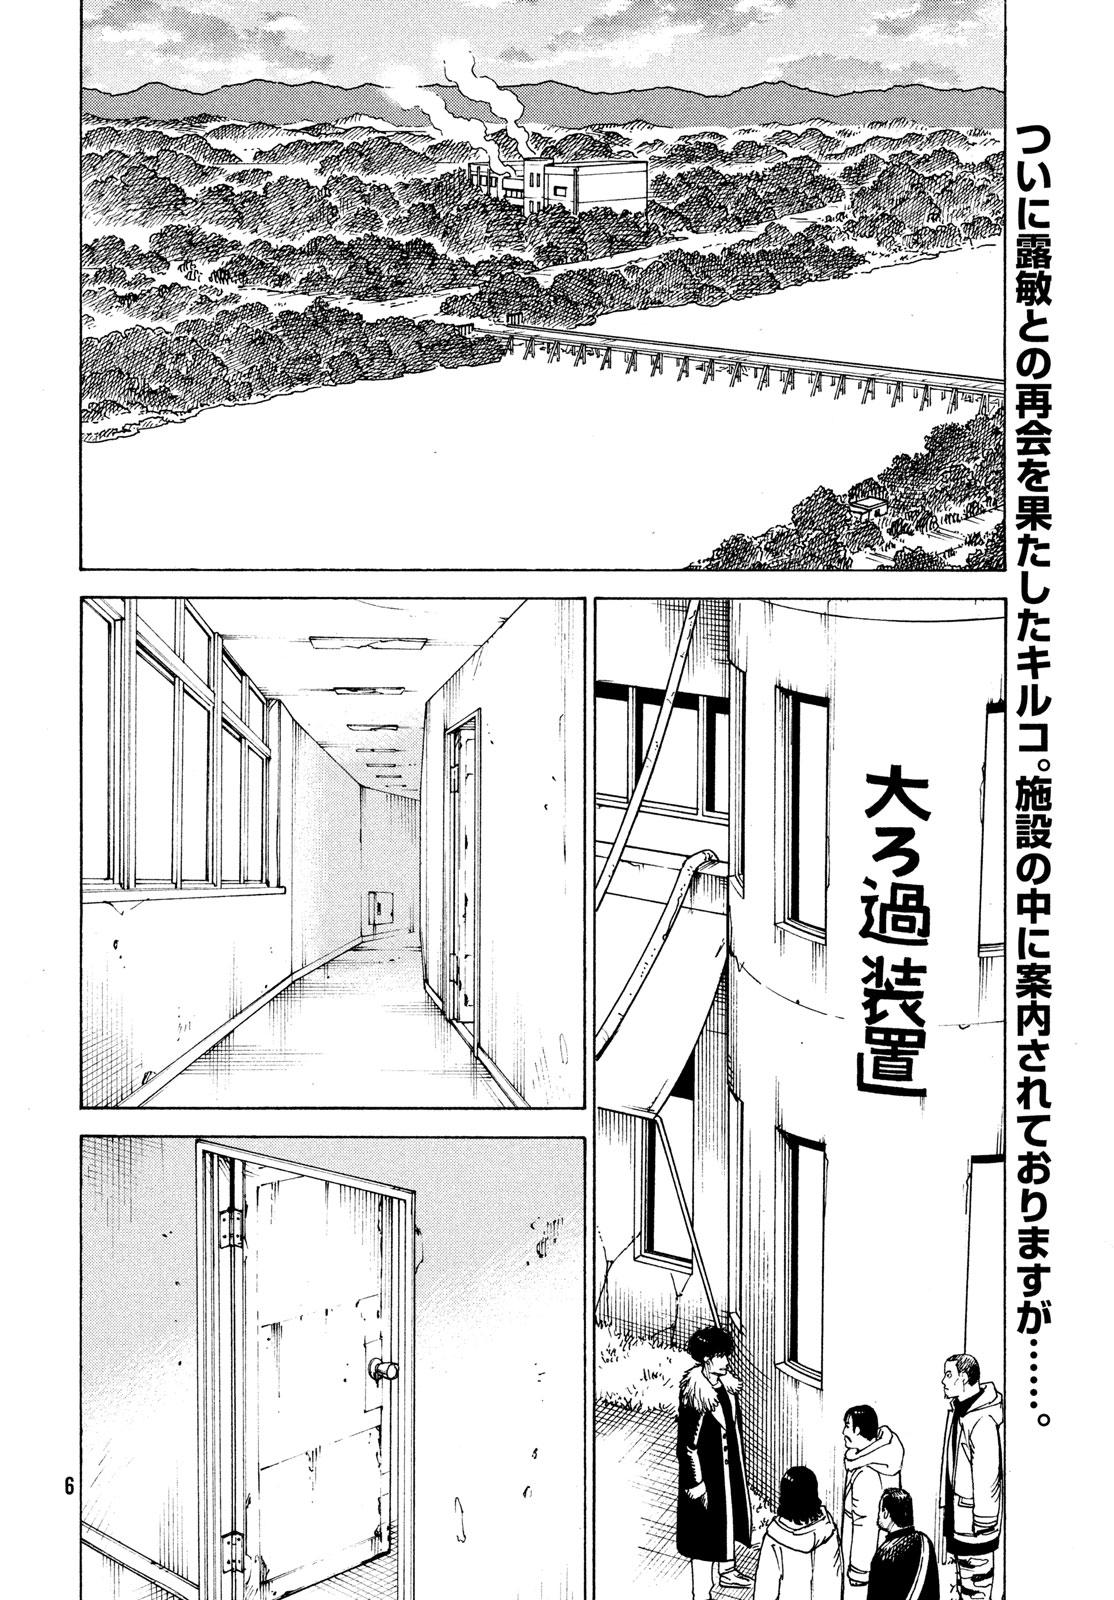 Read Tengoku Daimakyou 32 - Oni Scan